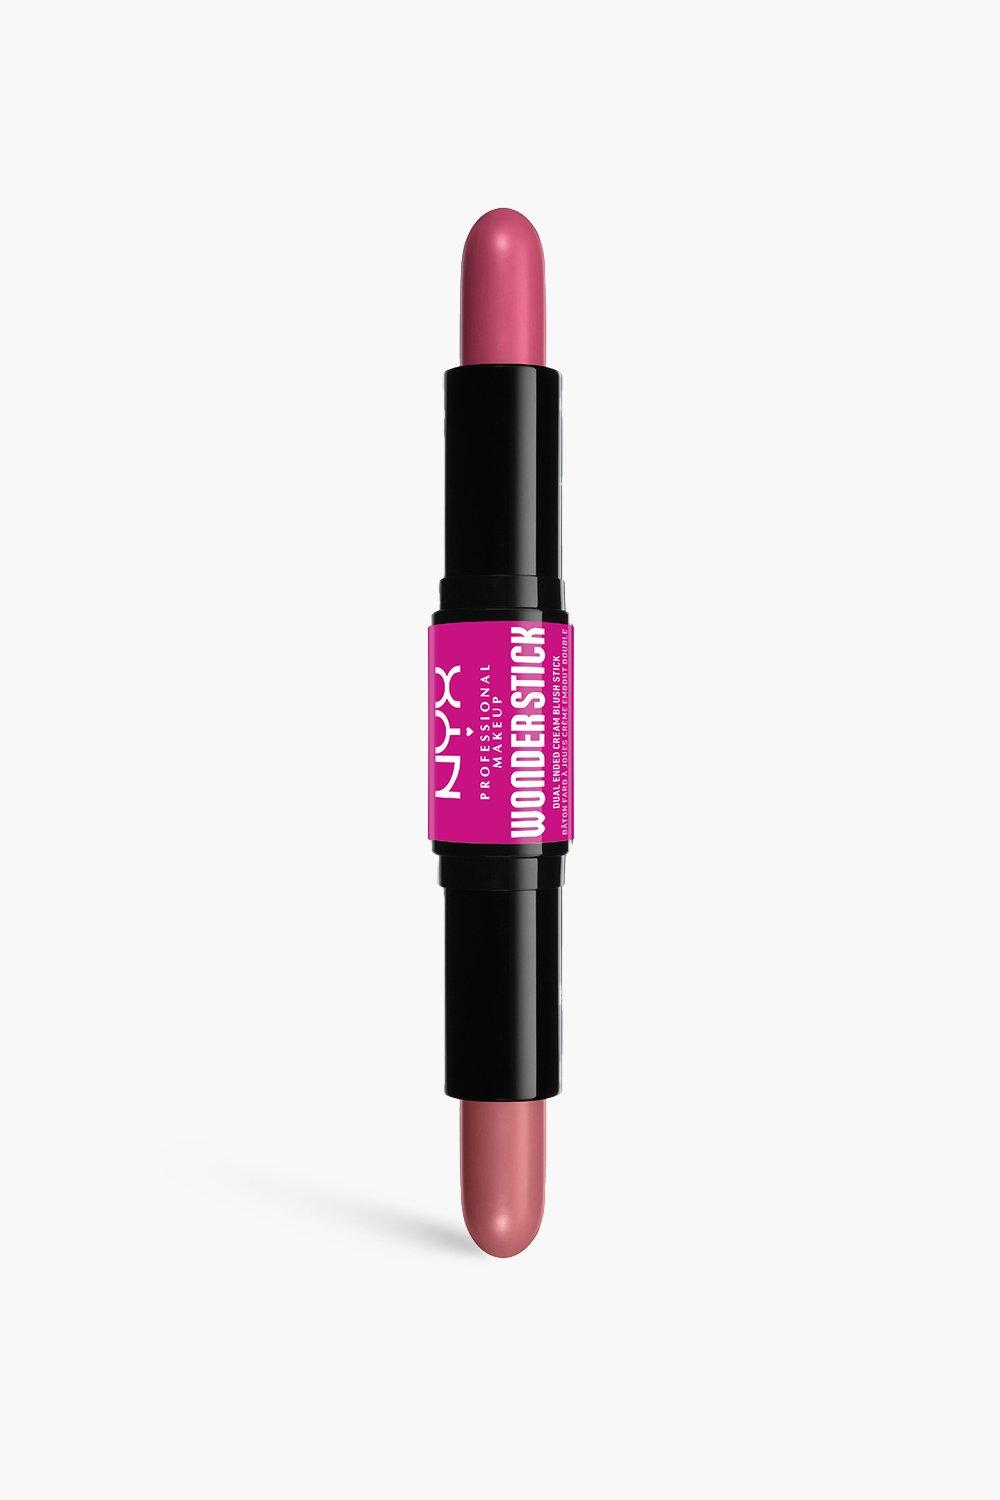 Nyx Professional Makeup Wonder Stick Blush, Light Peach + Baby Pink